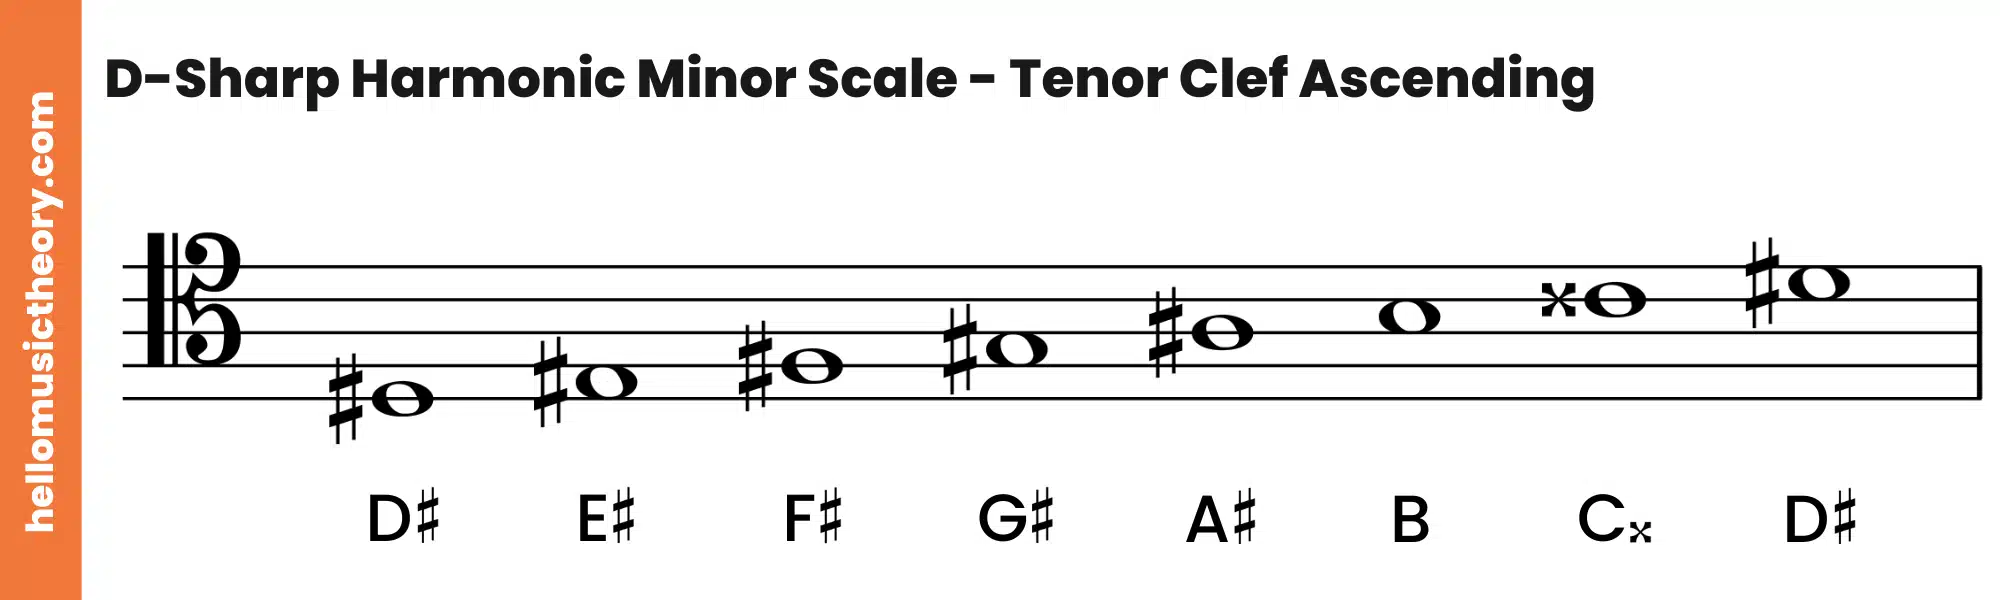 D-Sharp Harmonic Minor Scale Tenor Clef Ascending